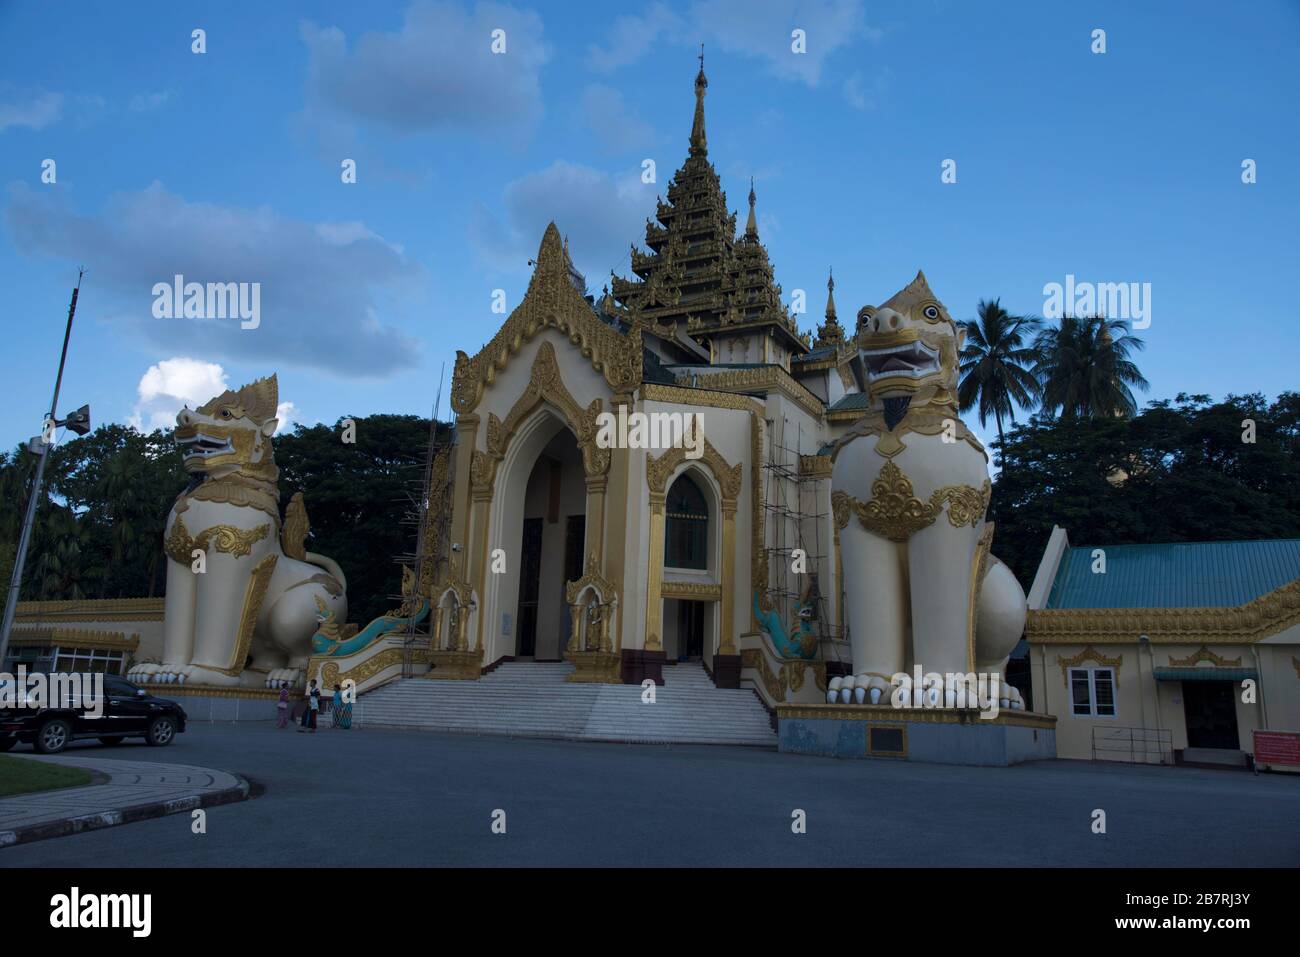 Myanmar: Yangon, ingresso pagoda Shwedagon che mostra enormi leoni su entrambi i lati dell'ingresso. Foto Stock